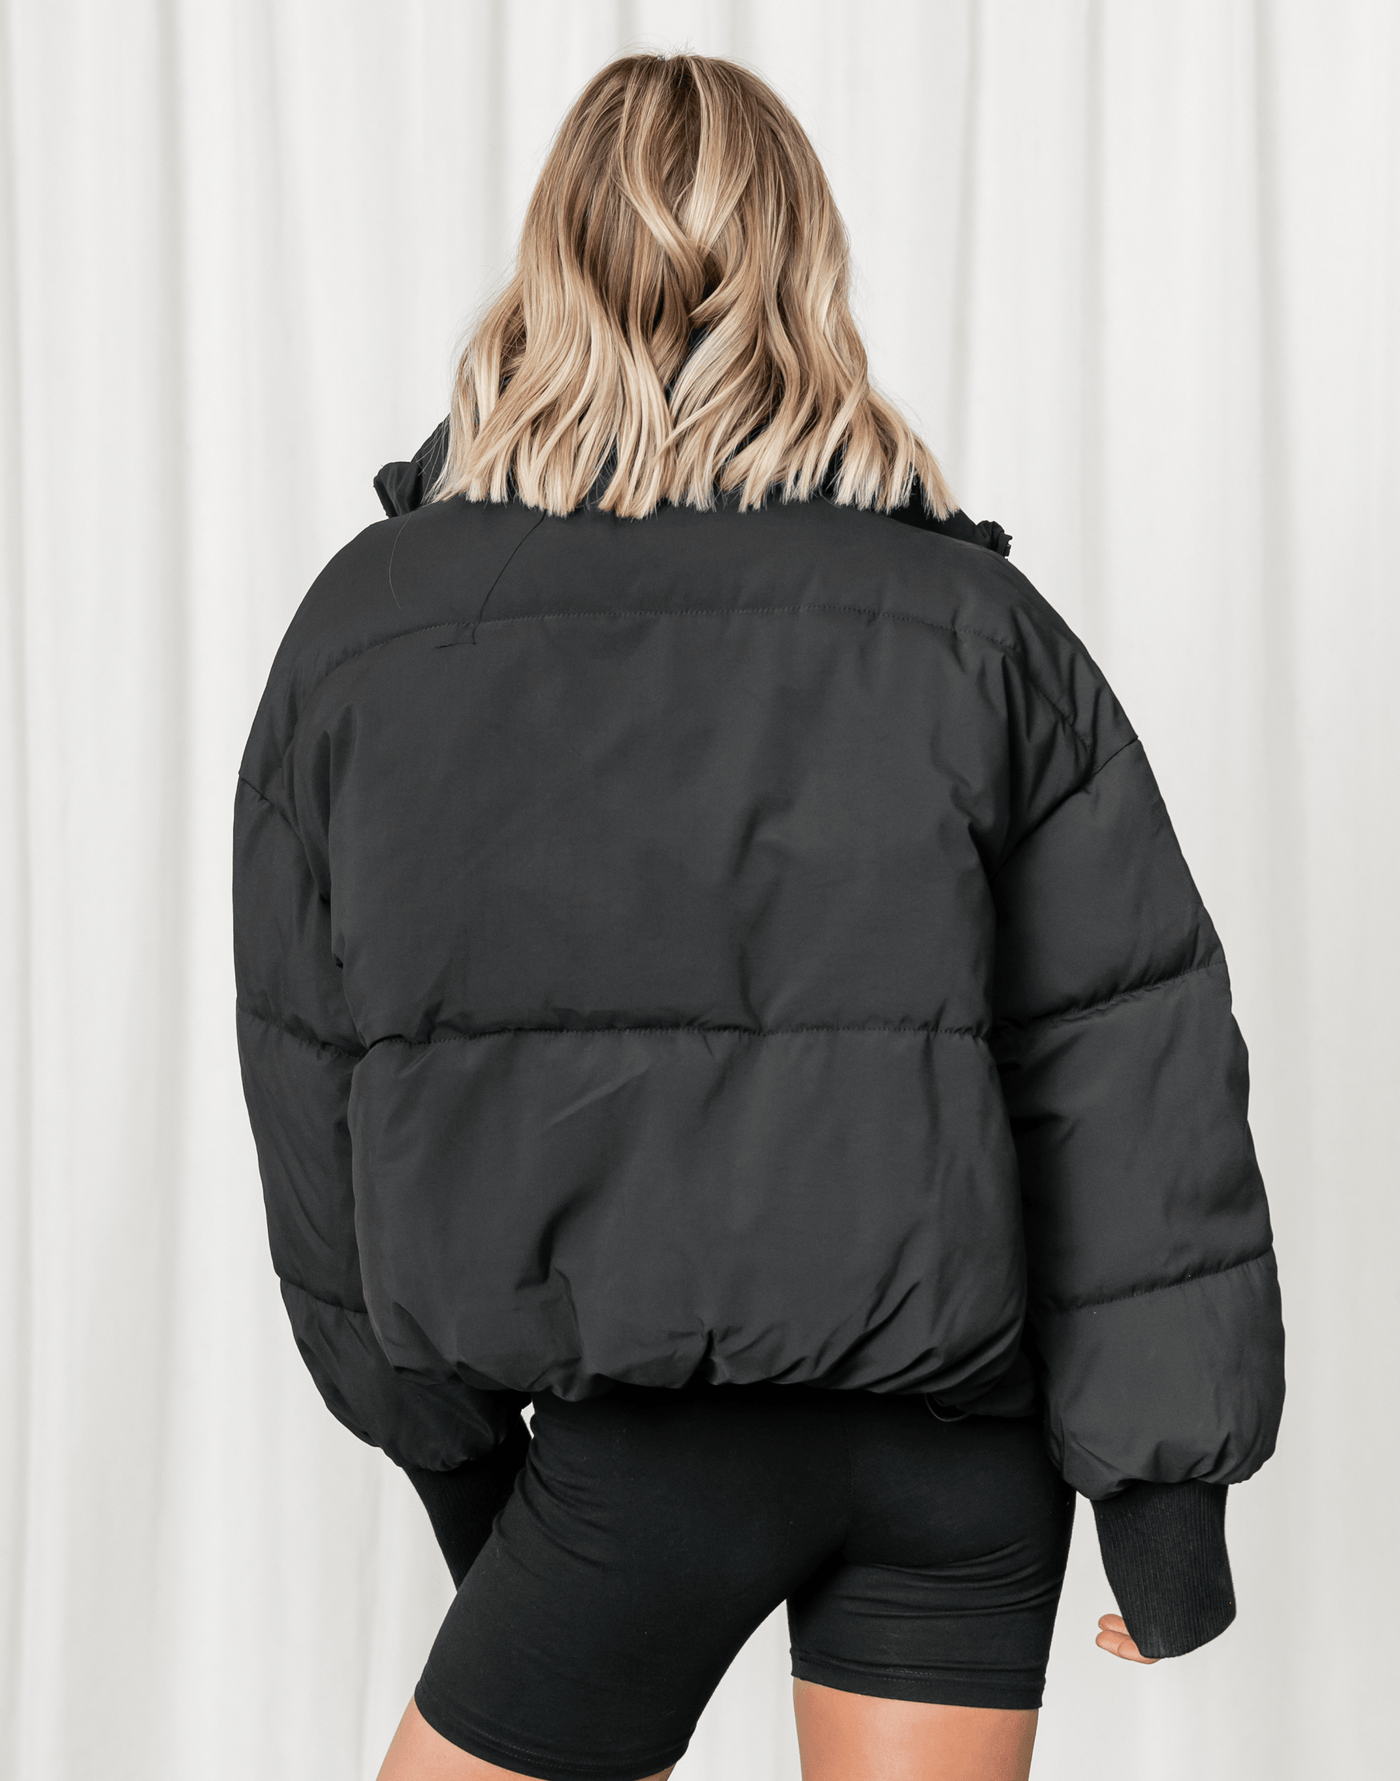  - Women's Jacket - Charcoal Clothing